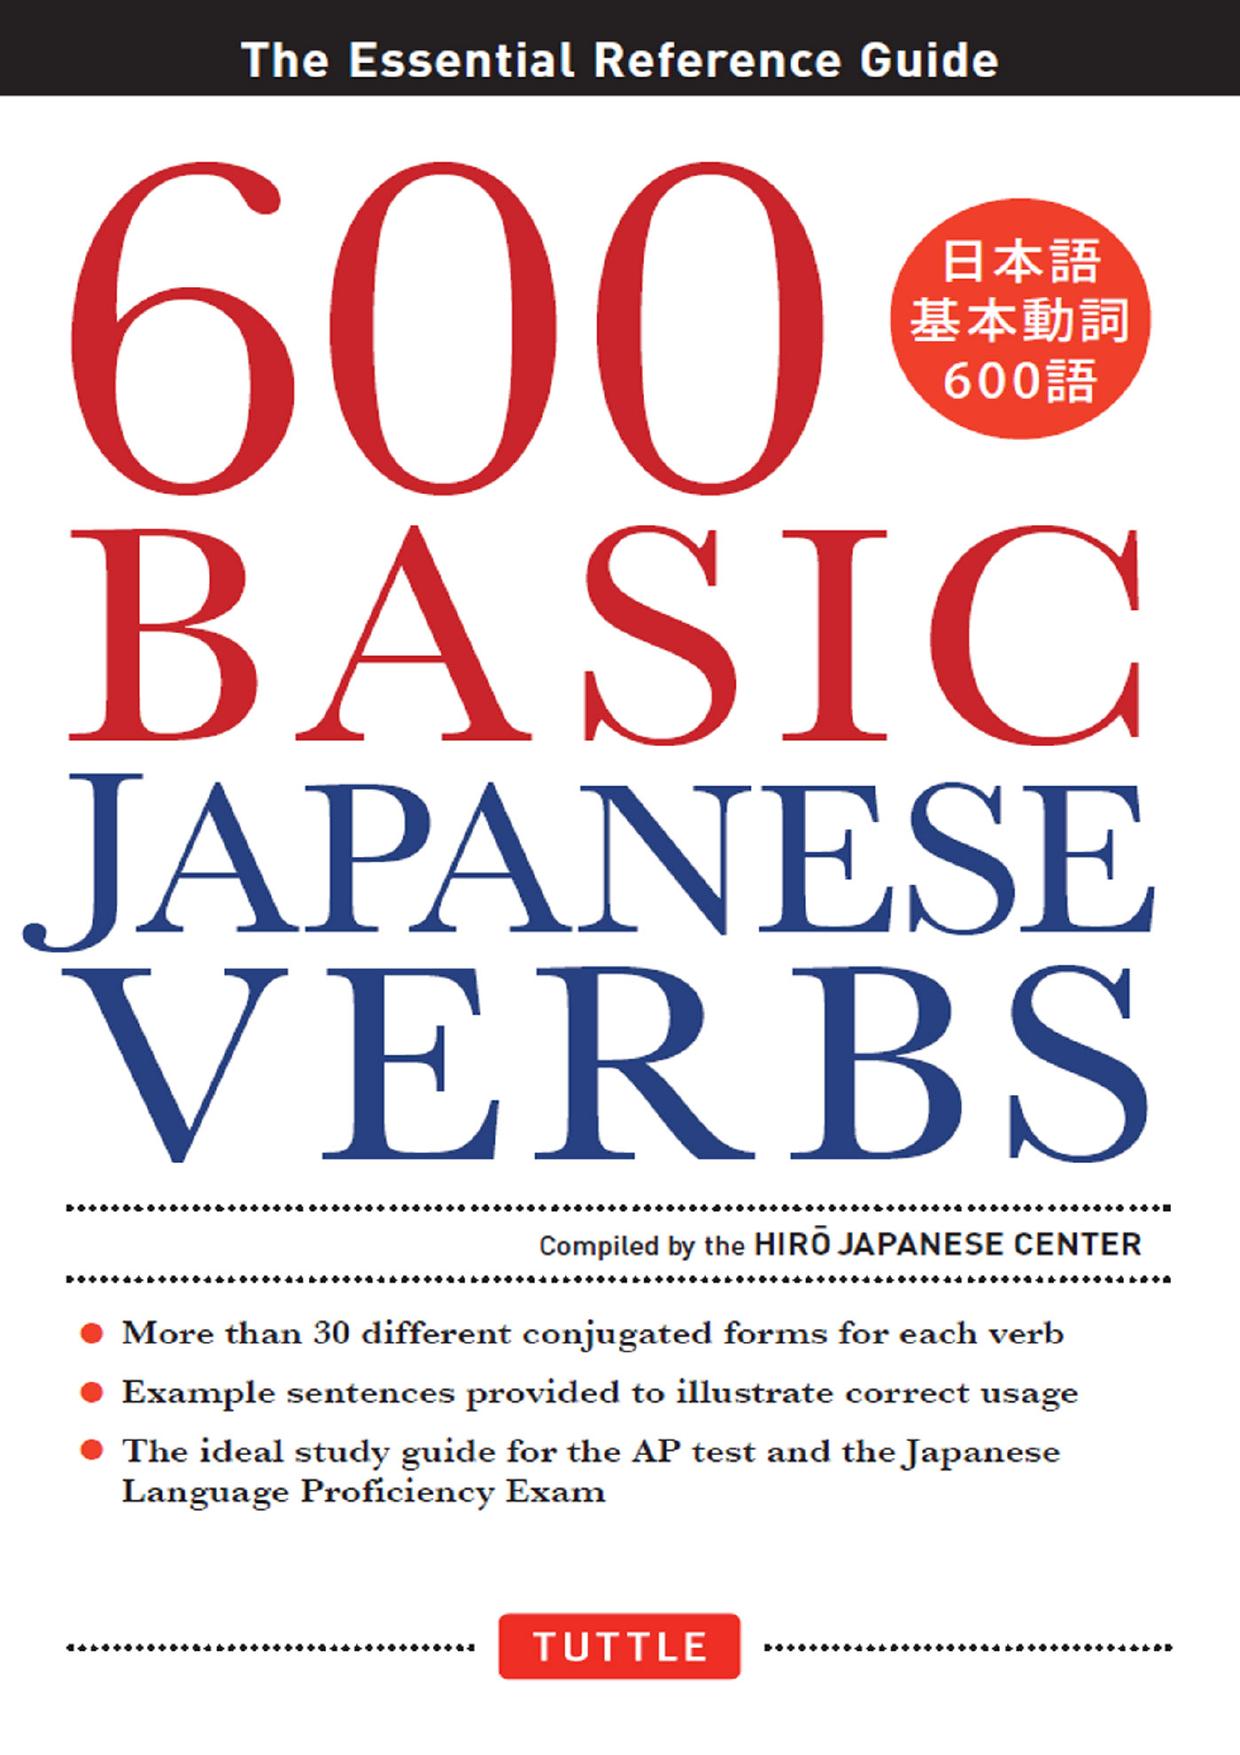 600 Basic Japanese Verbs by Hiro Japanese Center